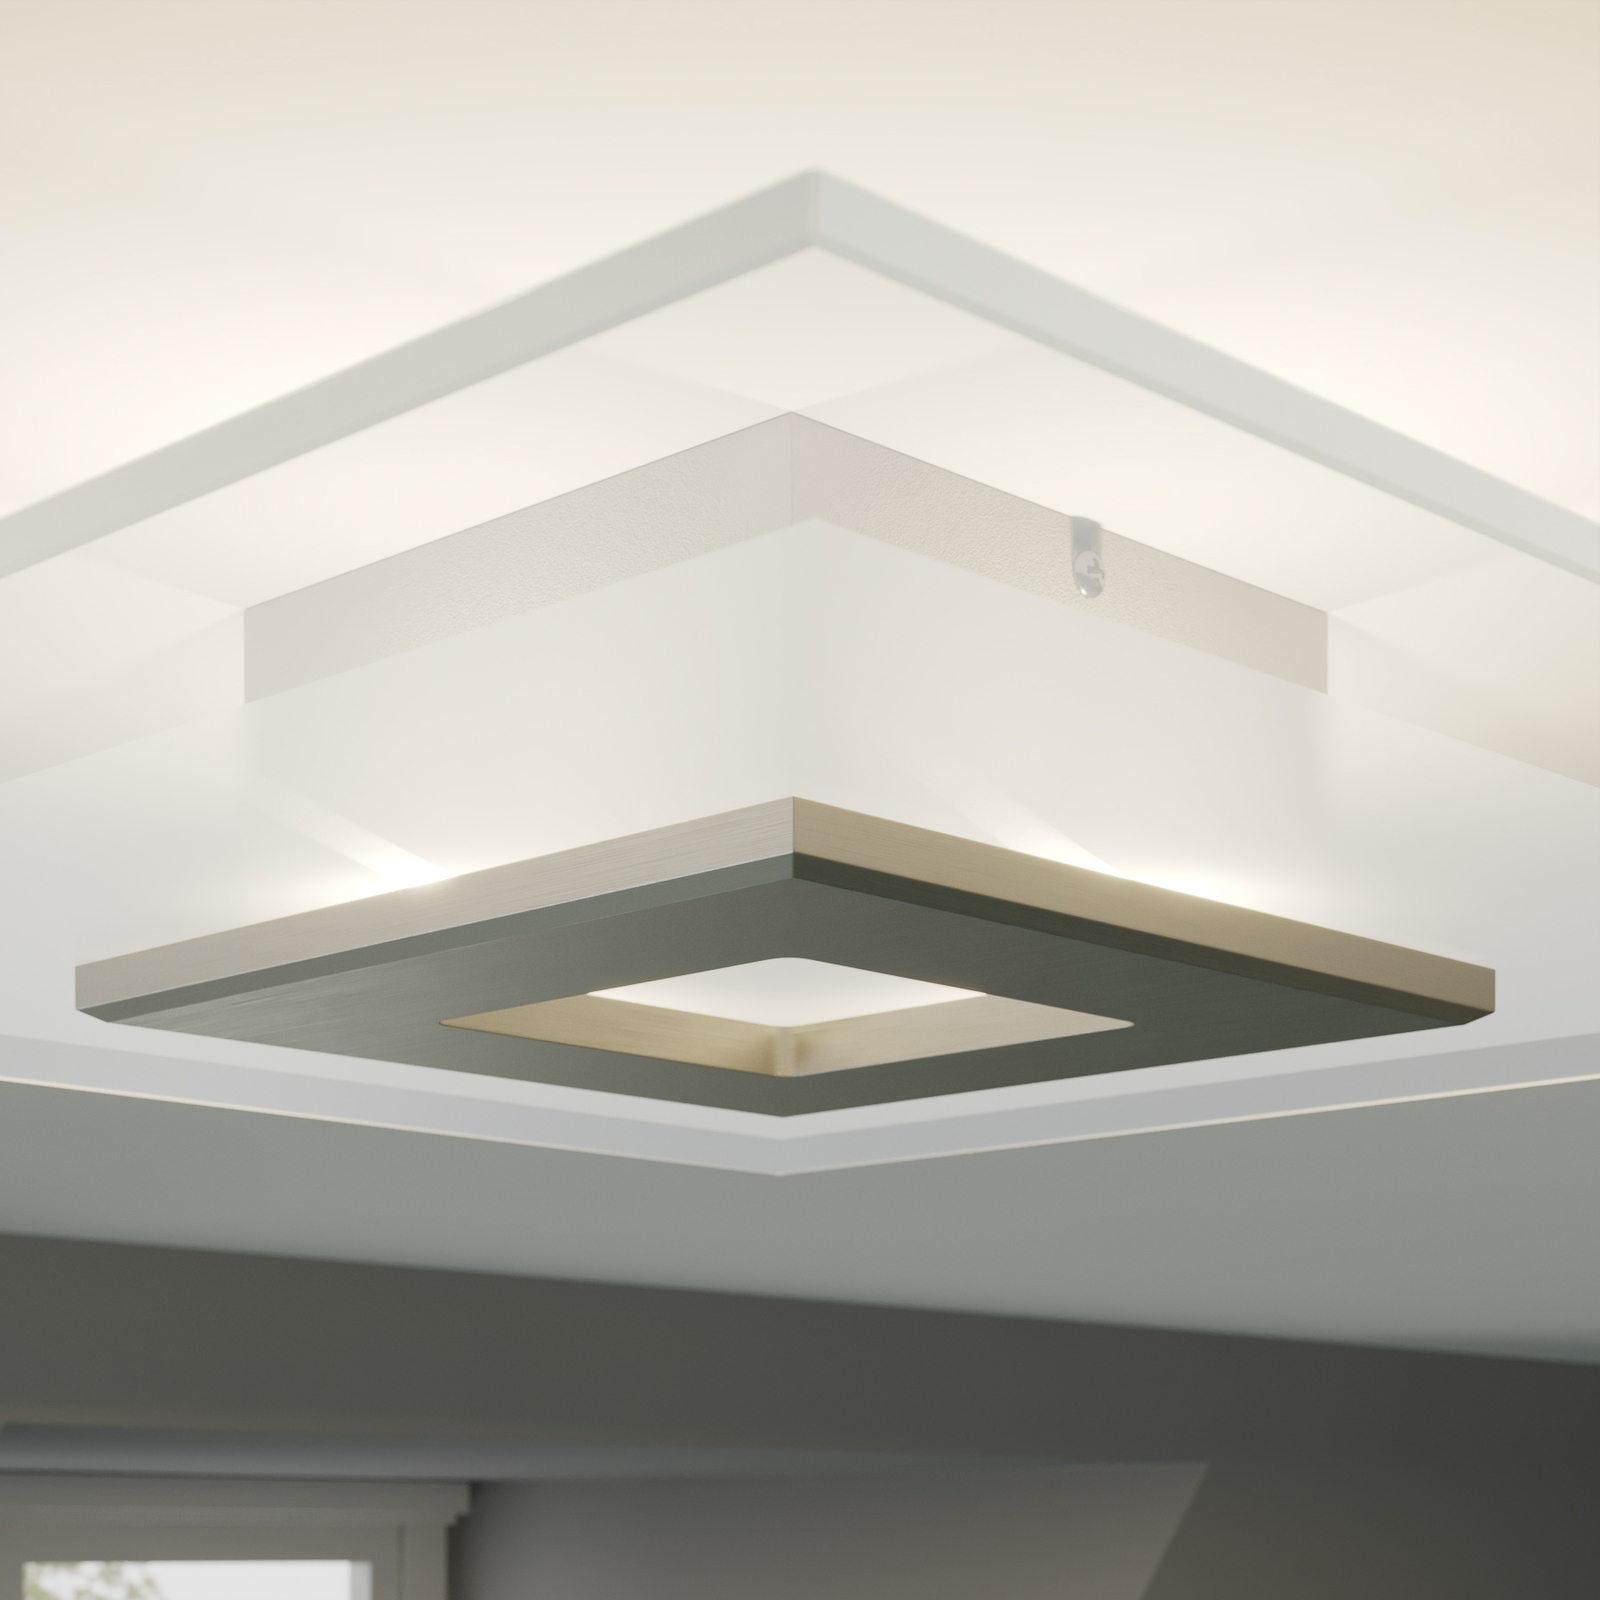 Quitani LED ceiling light Tian, glass shade, 39 x 39 cm